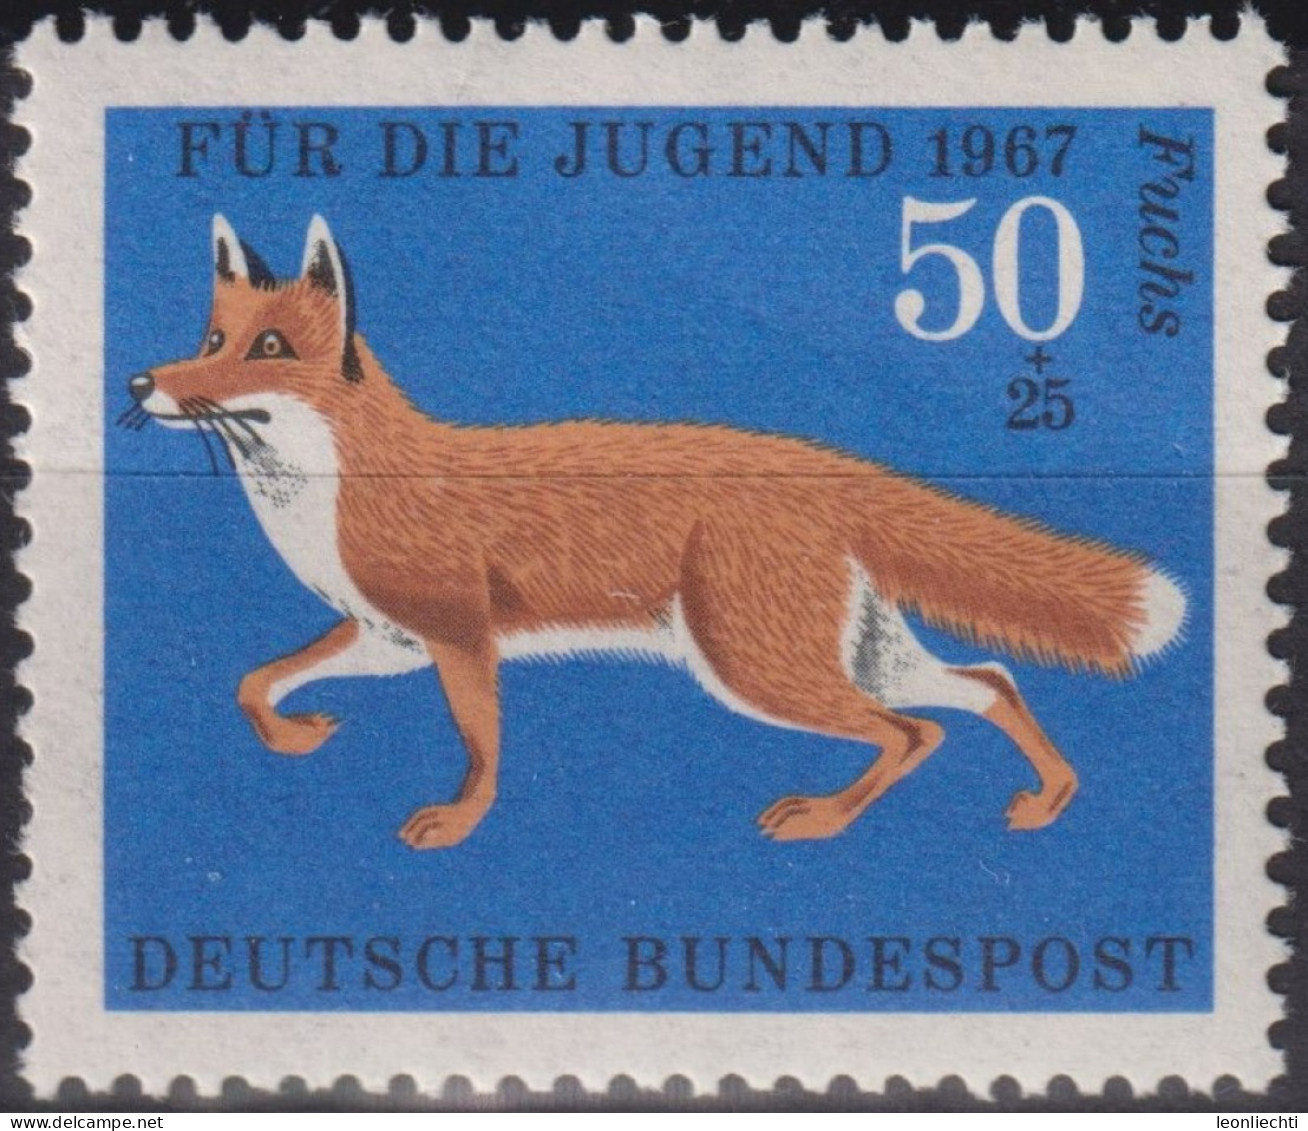 1967 Deutschland > BRD, ** Mi:DE 532, Sn:DE B425, Yt:DE 390, Fuchs, Red Fox (Vulpes Vulpes) - Animalez De Caza